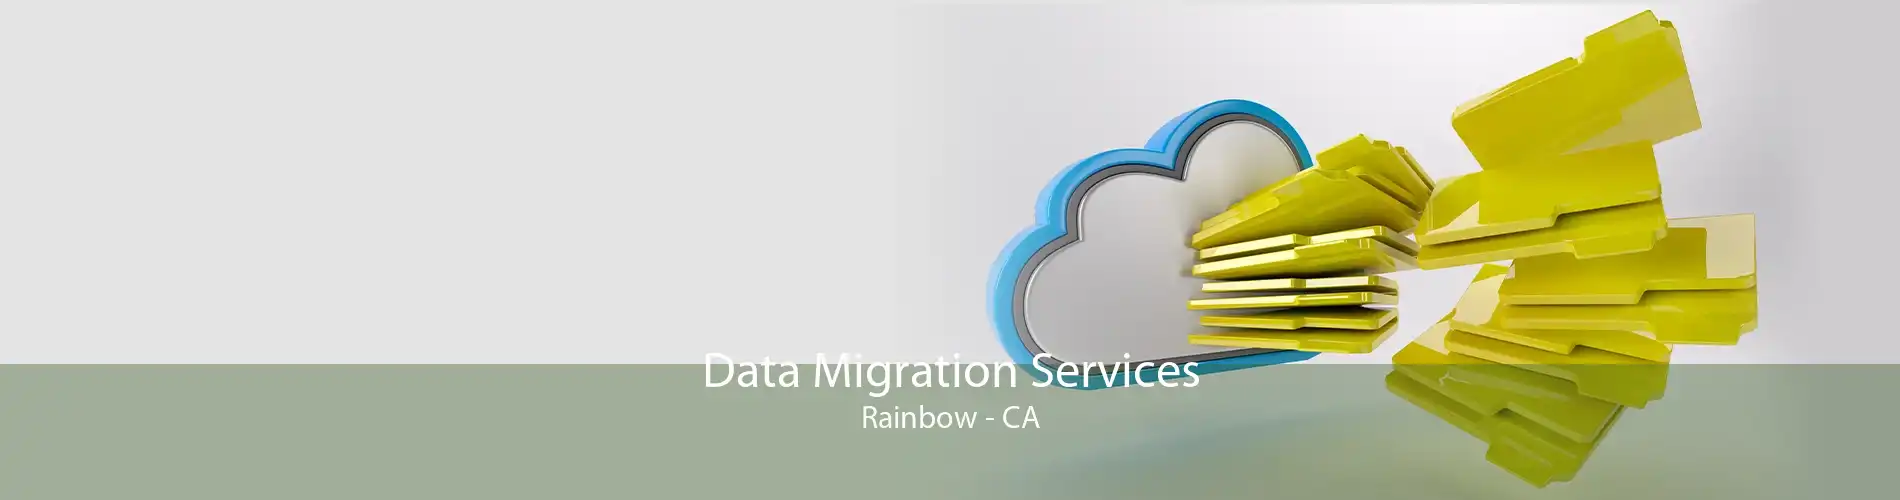 Data Migration Services Rainbow - CA